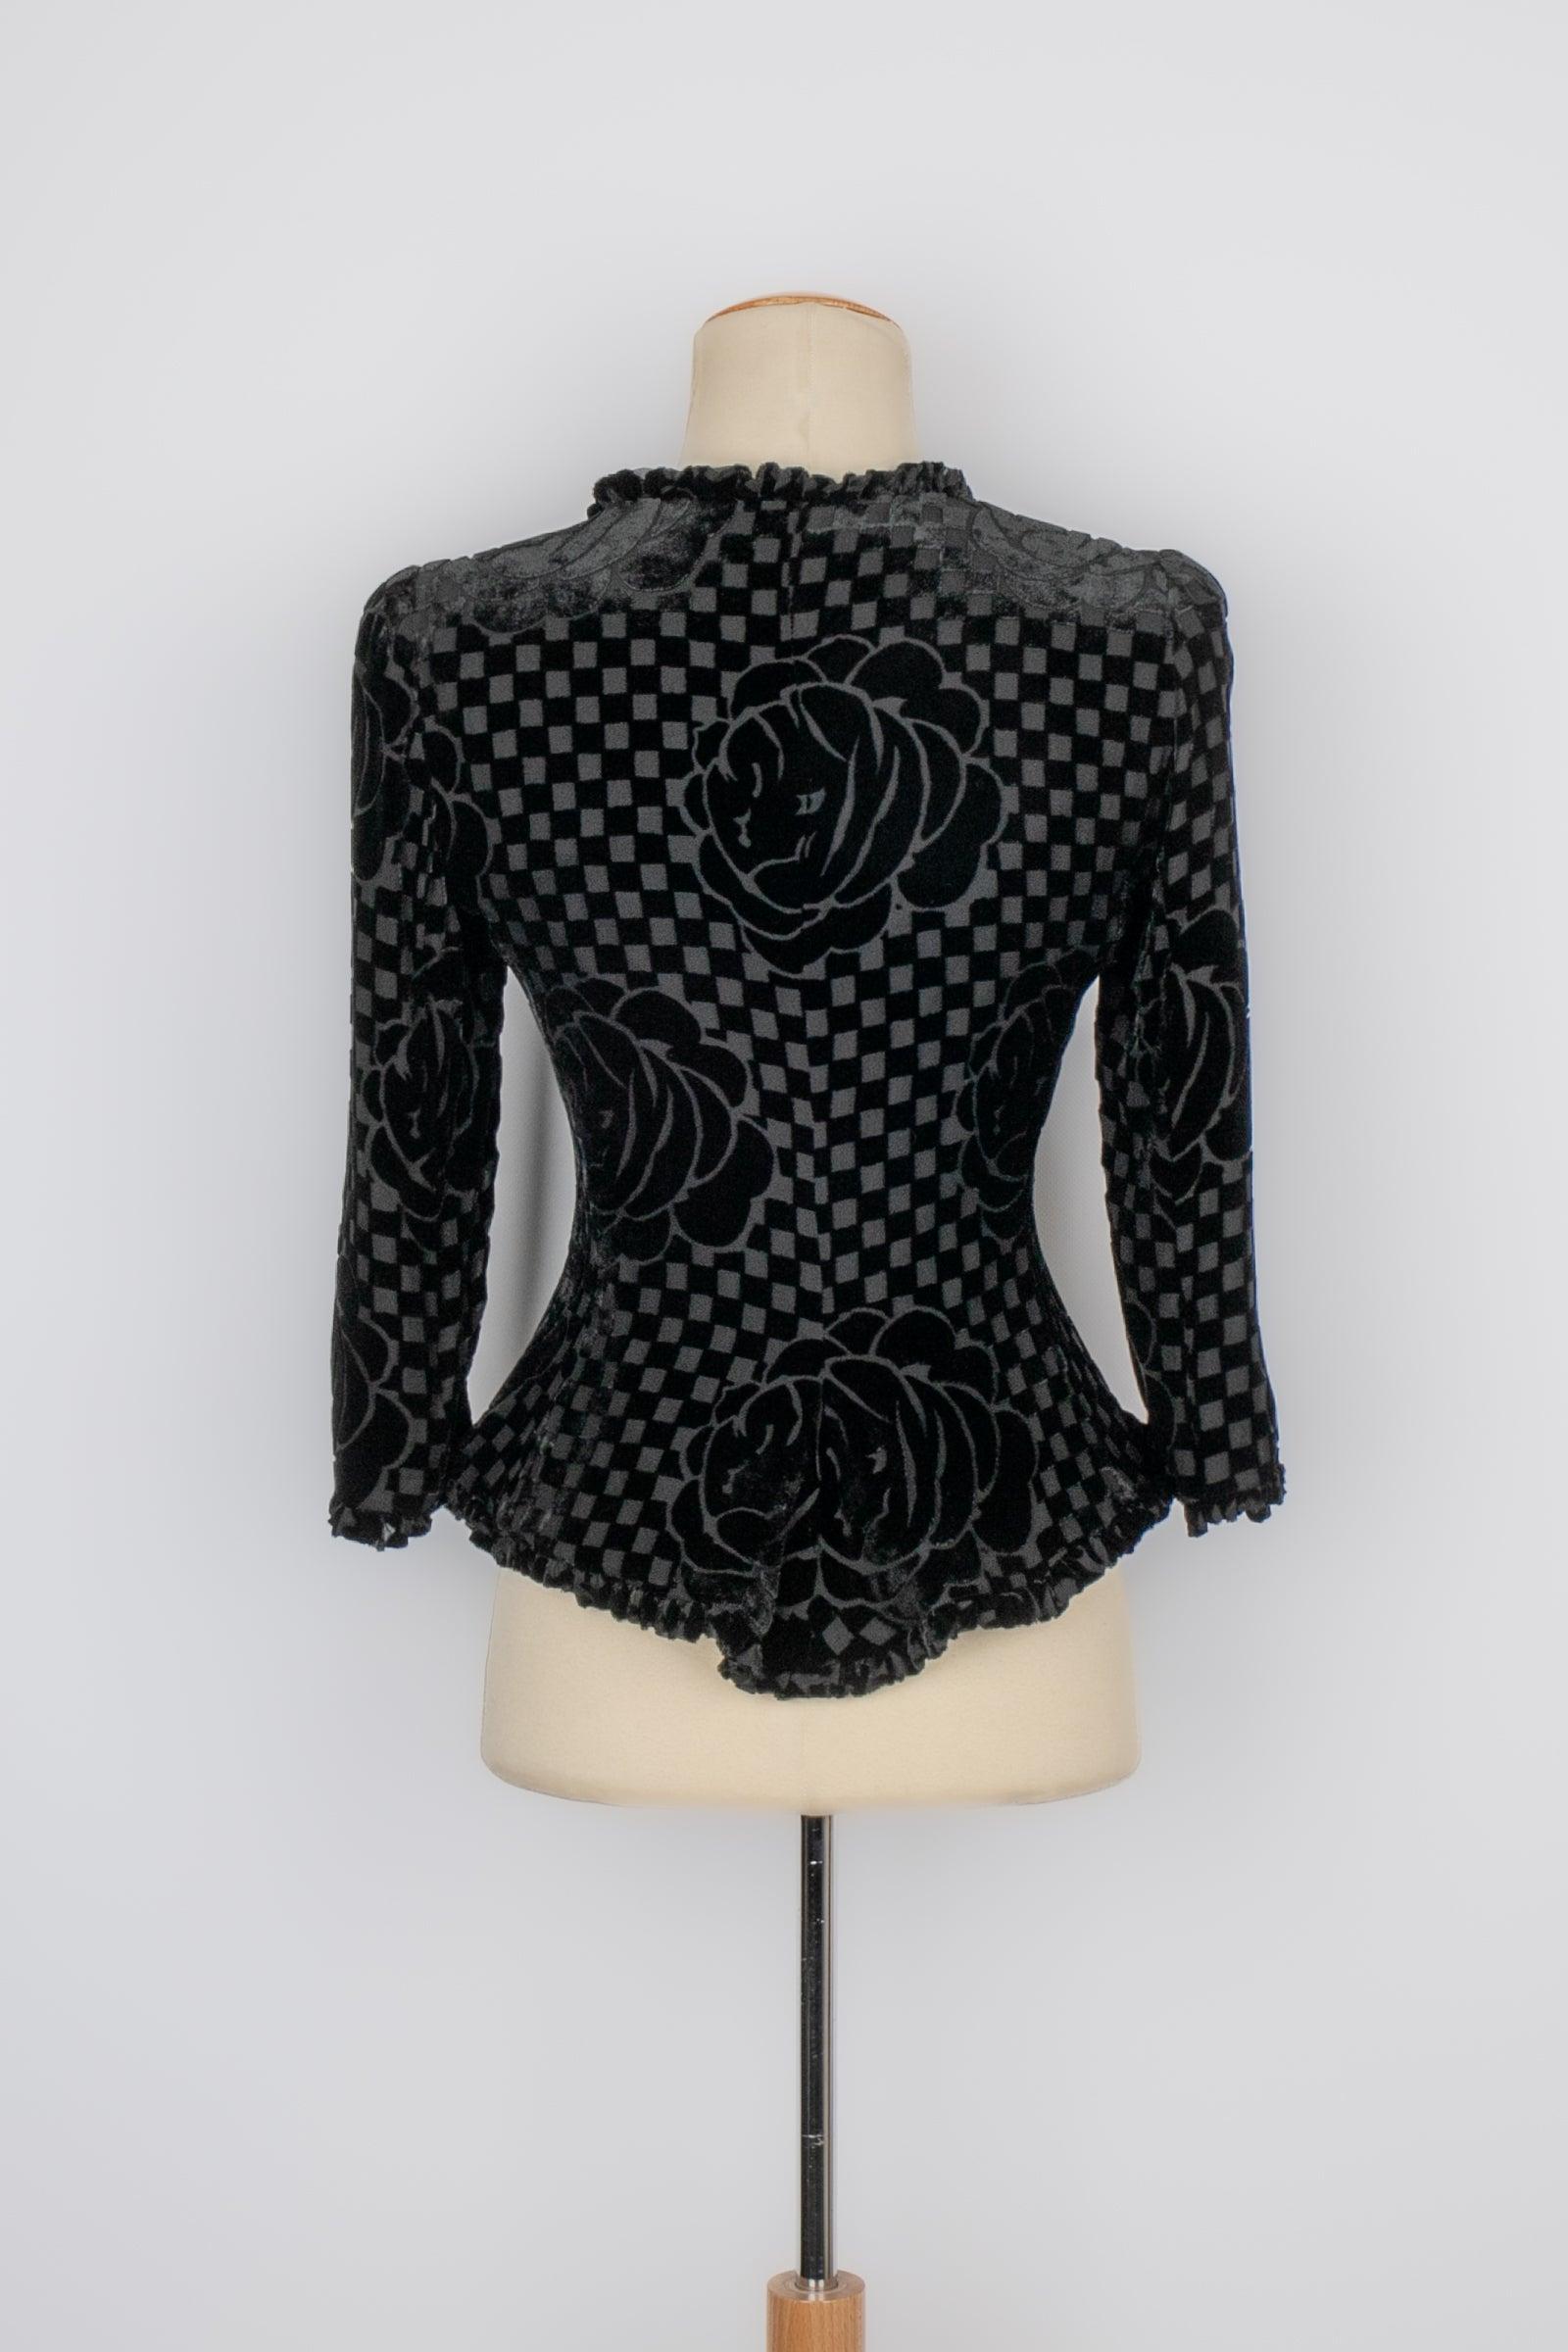 Armani Black Devoured Velvet Jacket In Excellent Condition For Sale In SAINT-OUEN-SUR-SEINE, FR